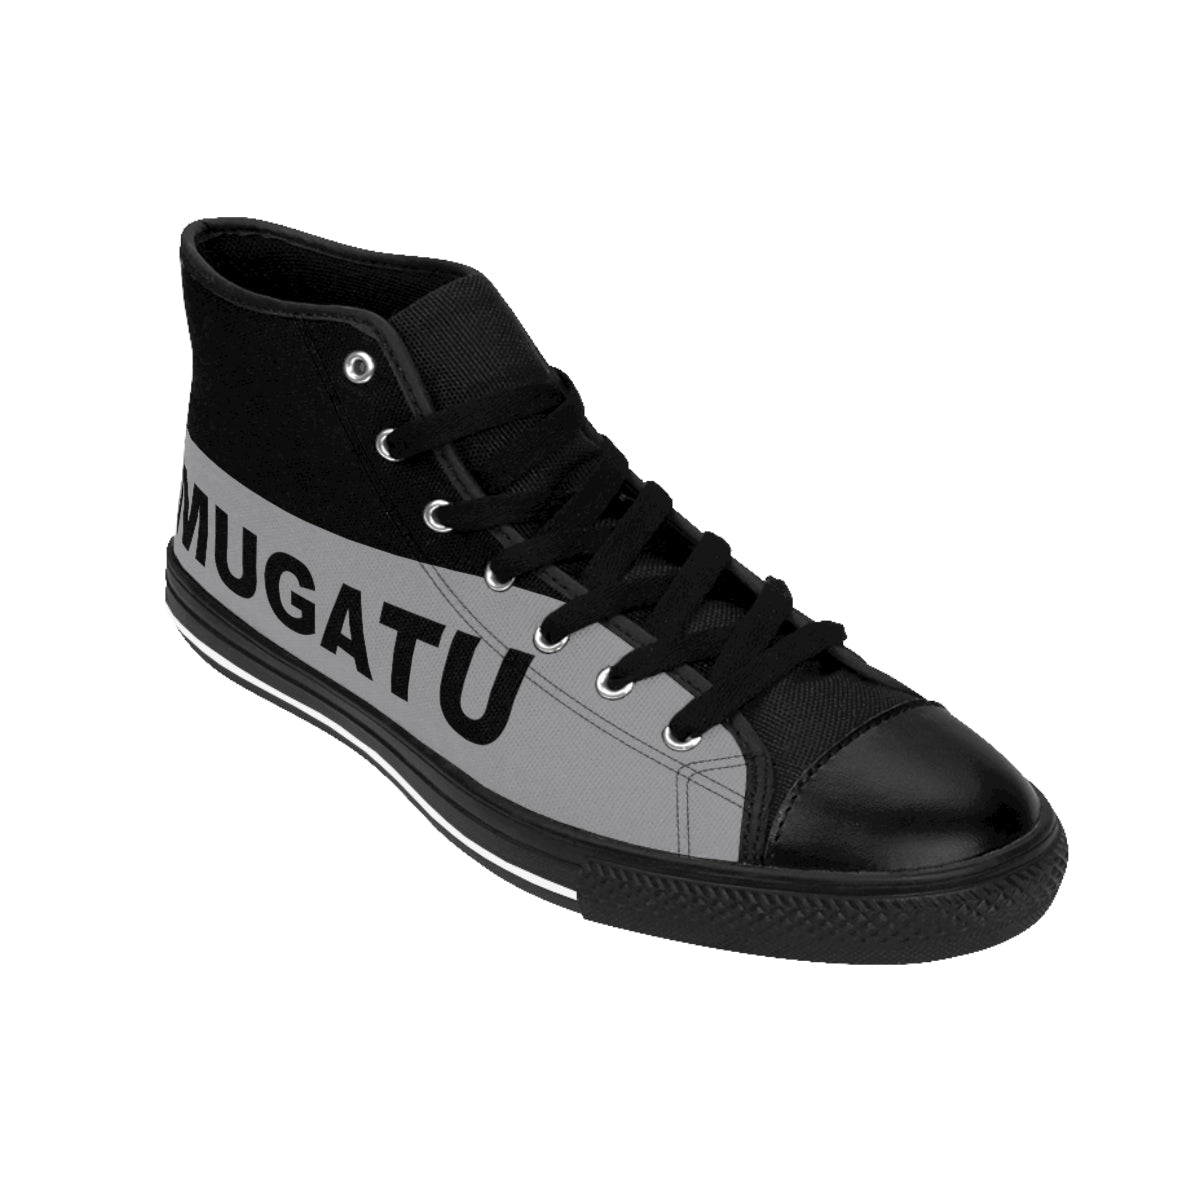 Mugatu "Zoolander" | Fashion Freak High Top Canvas Sneakers